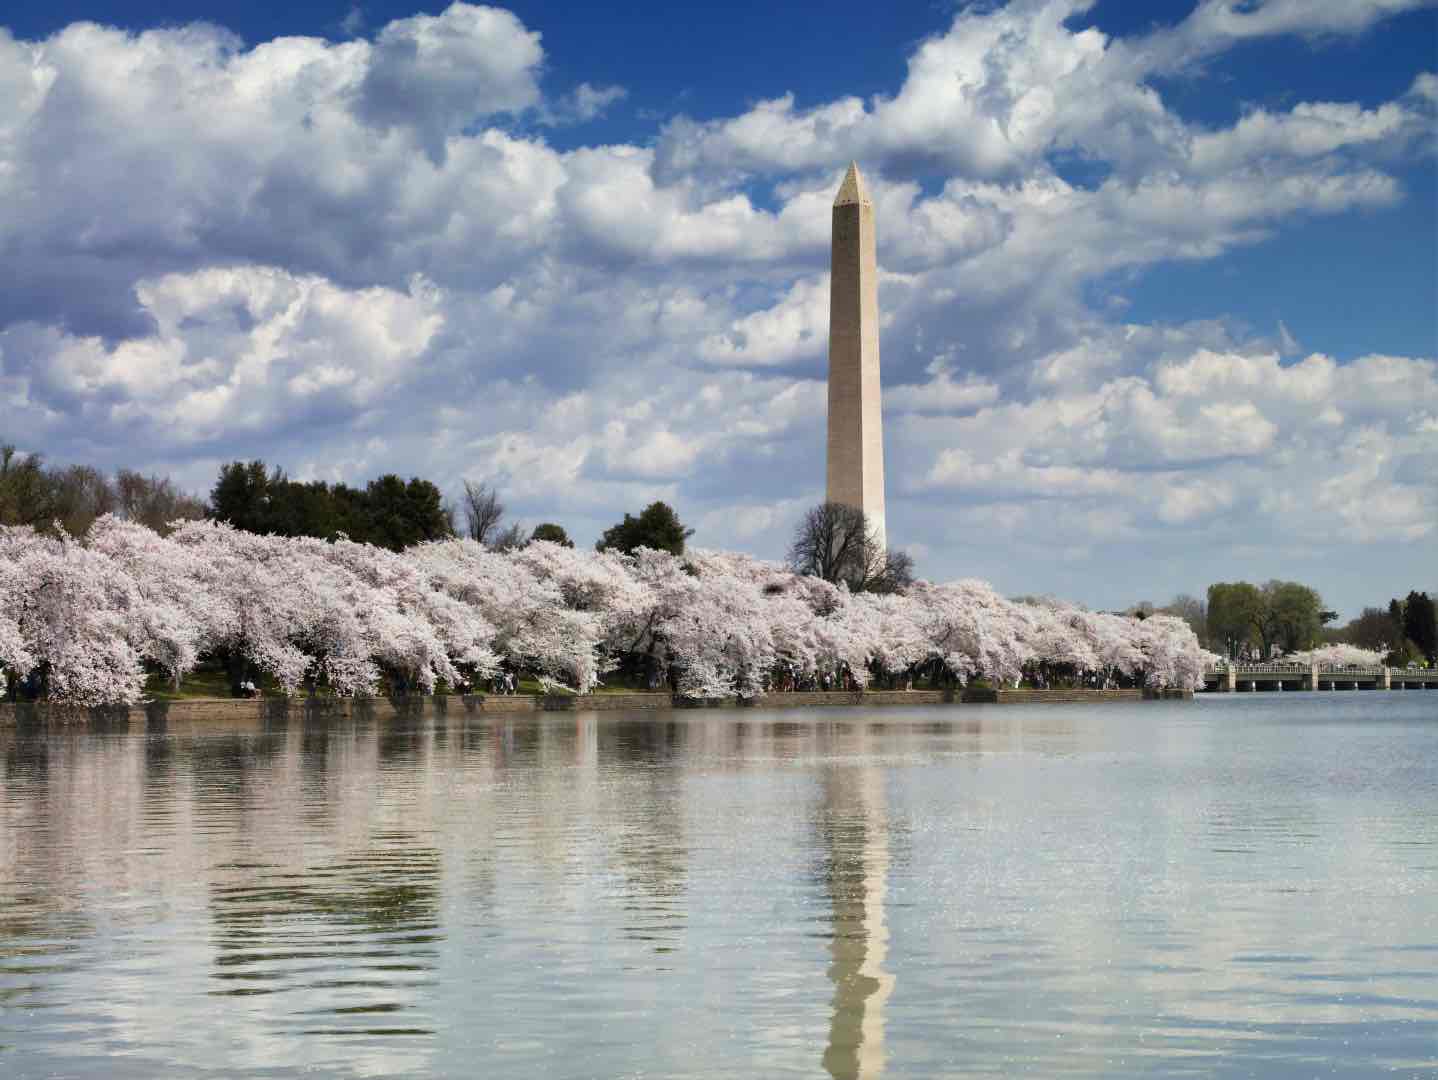 Washington Monument in spring, Washington, D.C.